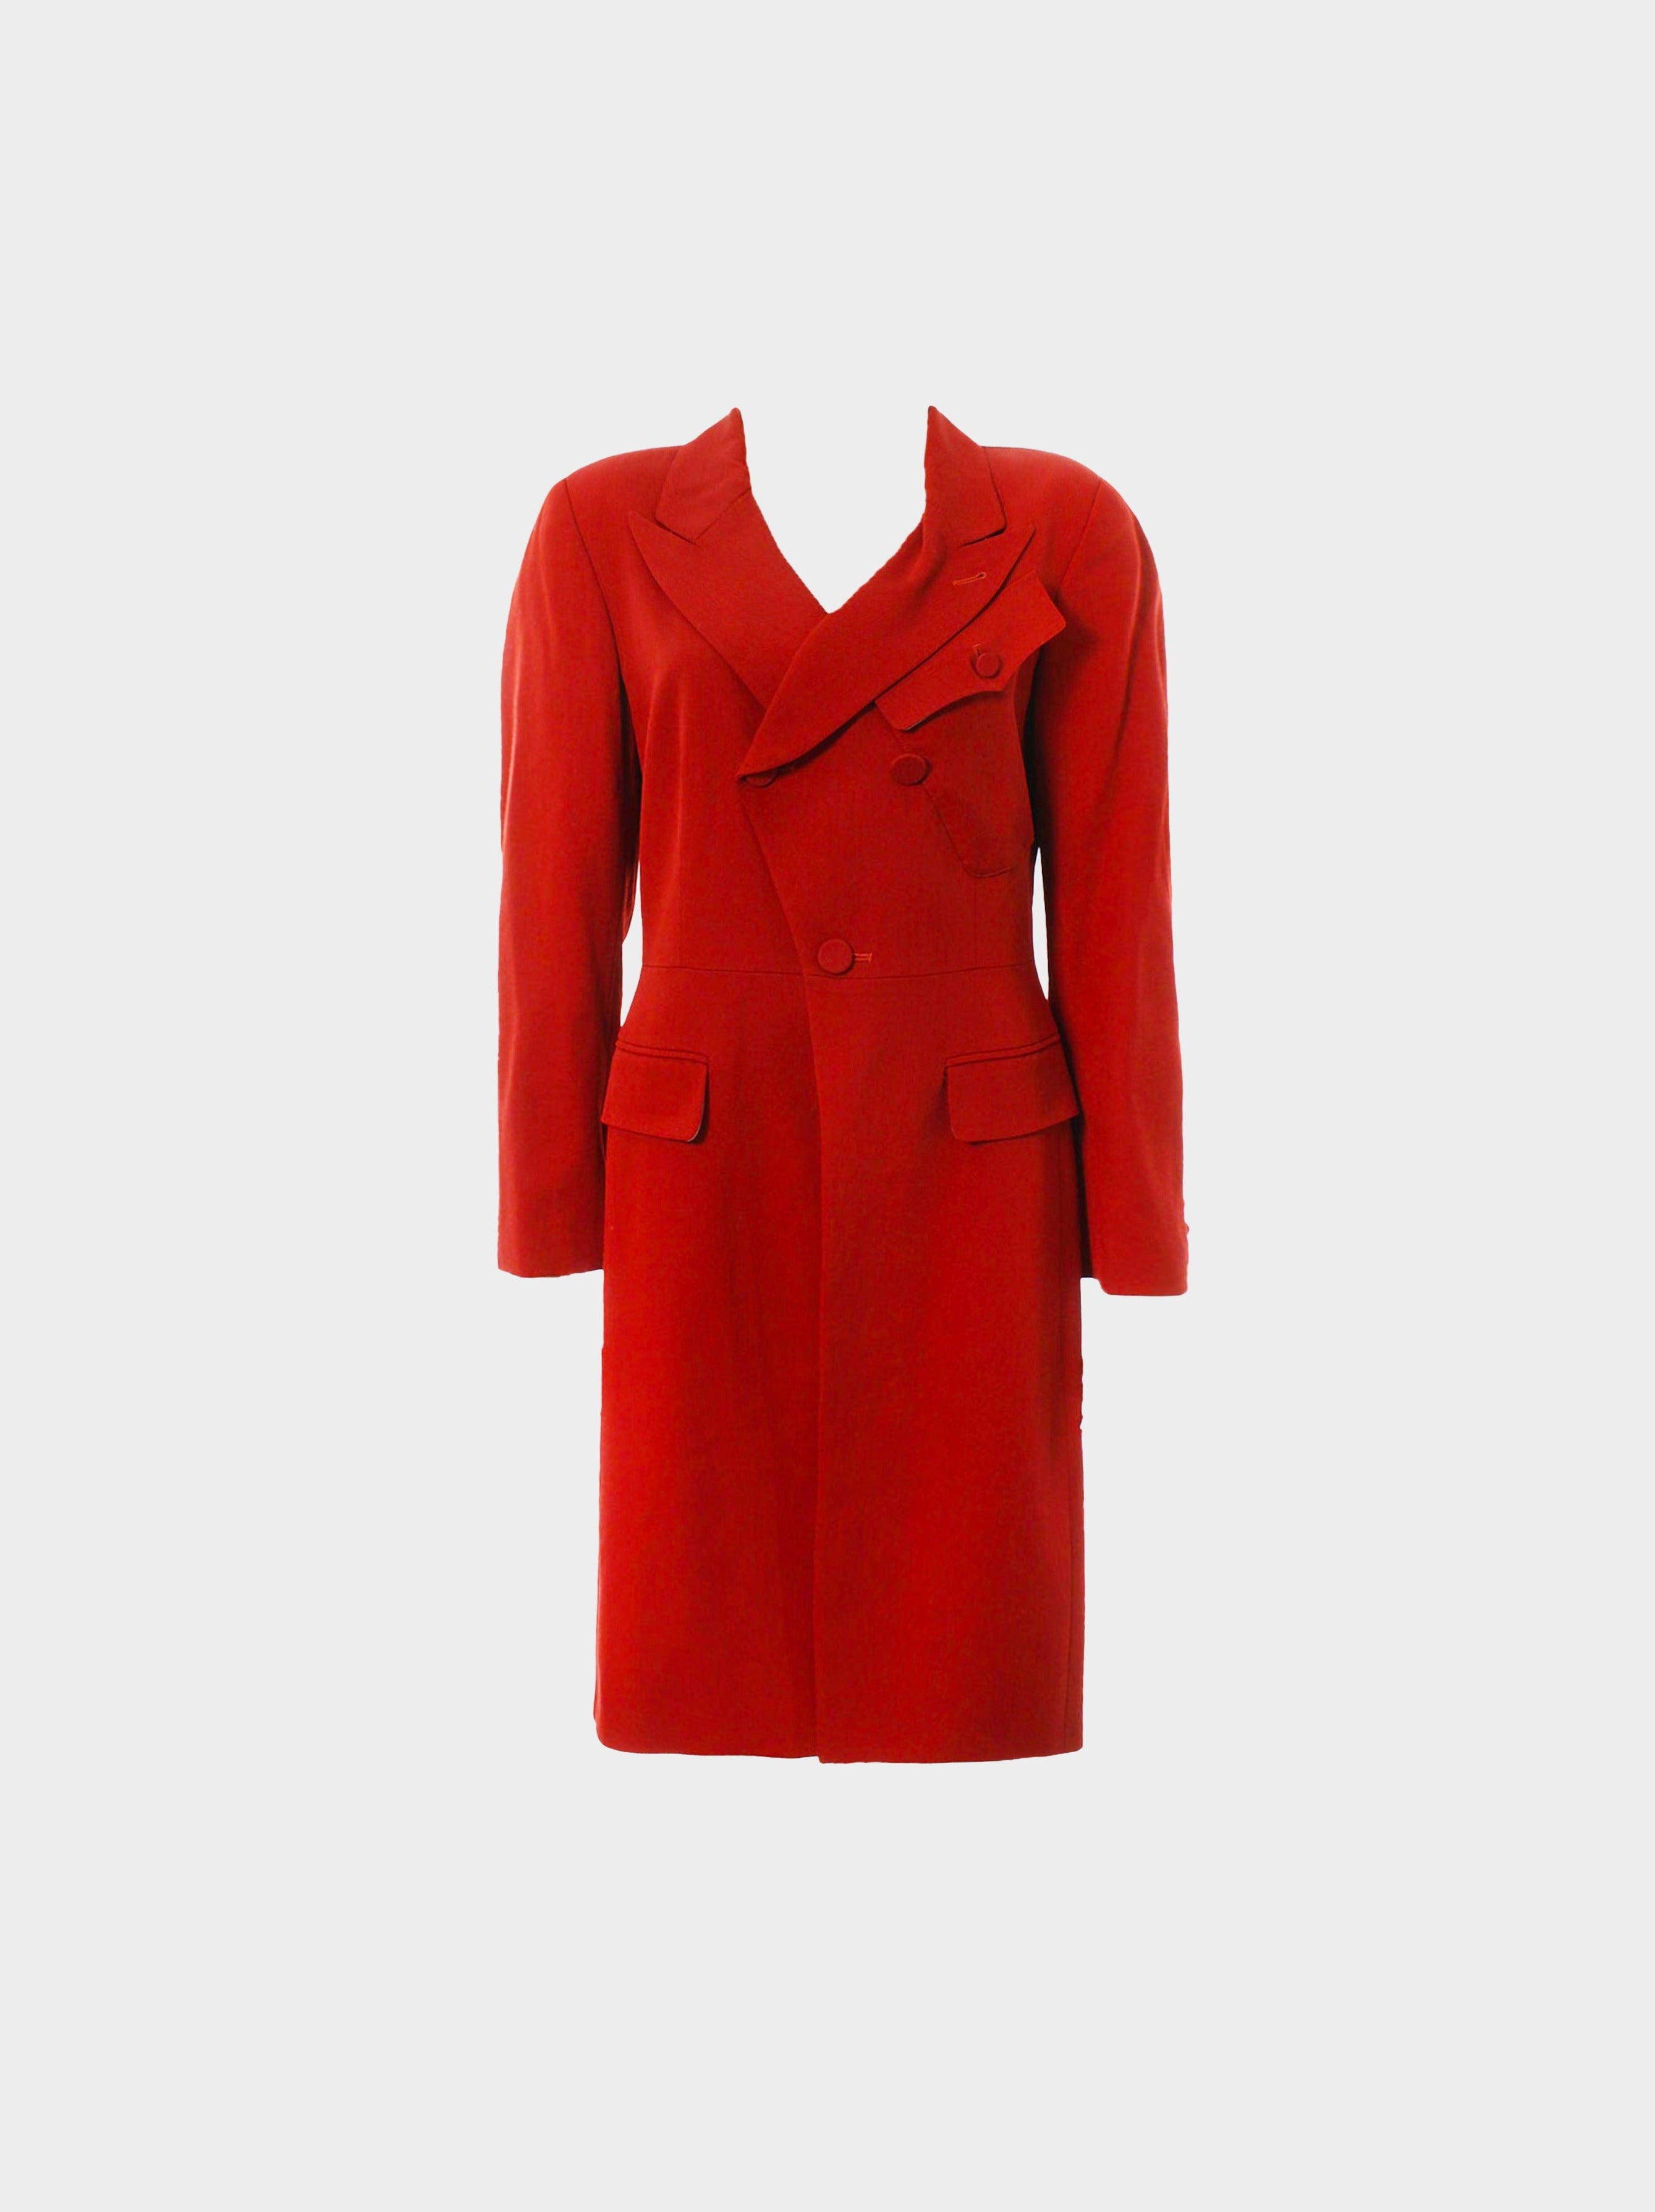 Jean Paul Gaultier 1990s Classique Coat Dress